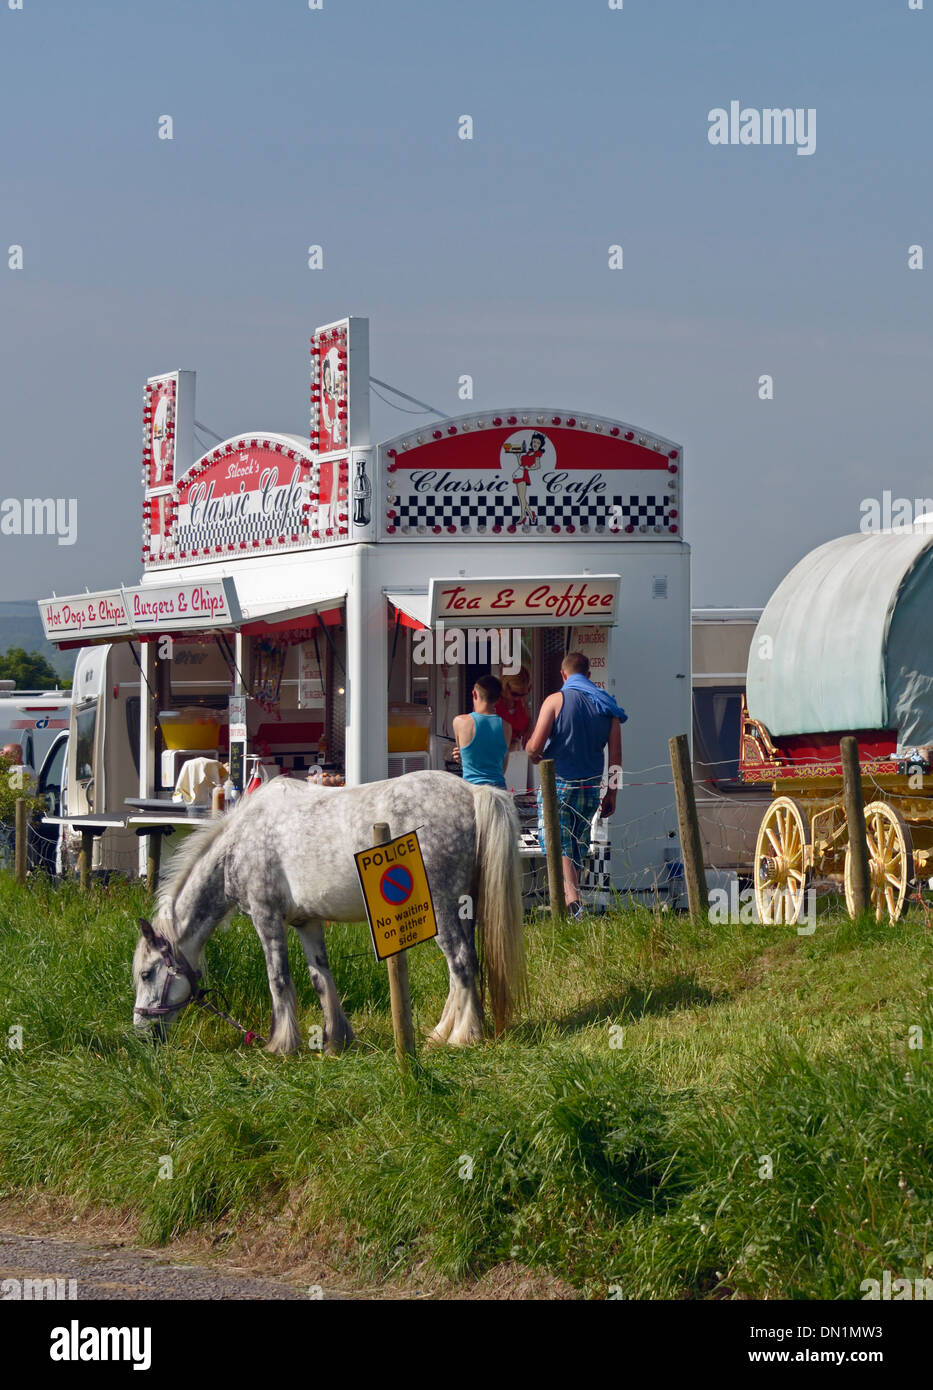 Silcock's Classic Cafe. Appleby Horse Fair, June 2013. Appleby-in-Westmorland, Cumbria, England, United Kingdom, Europe. Stock Photo